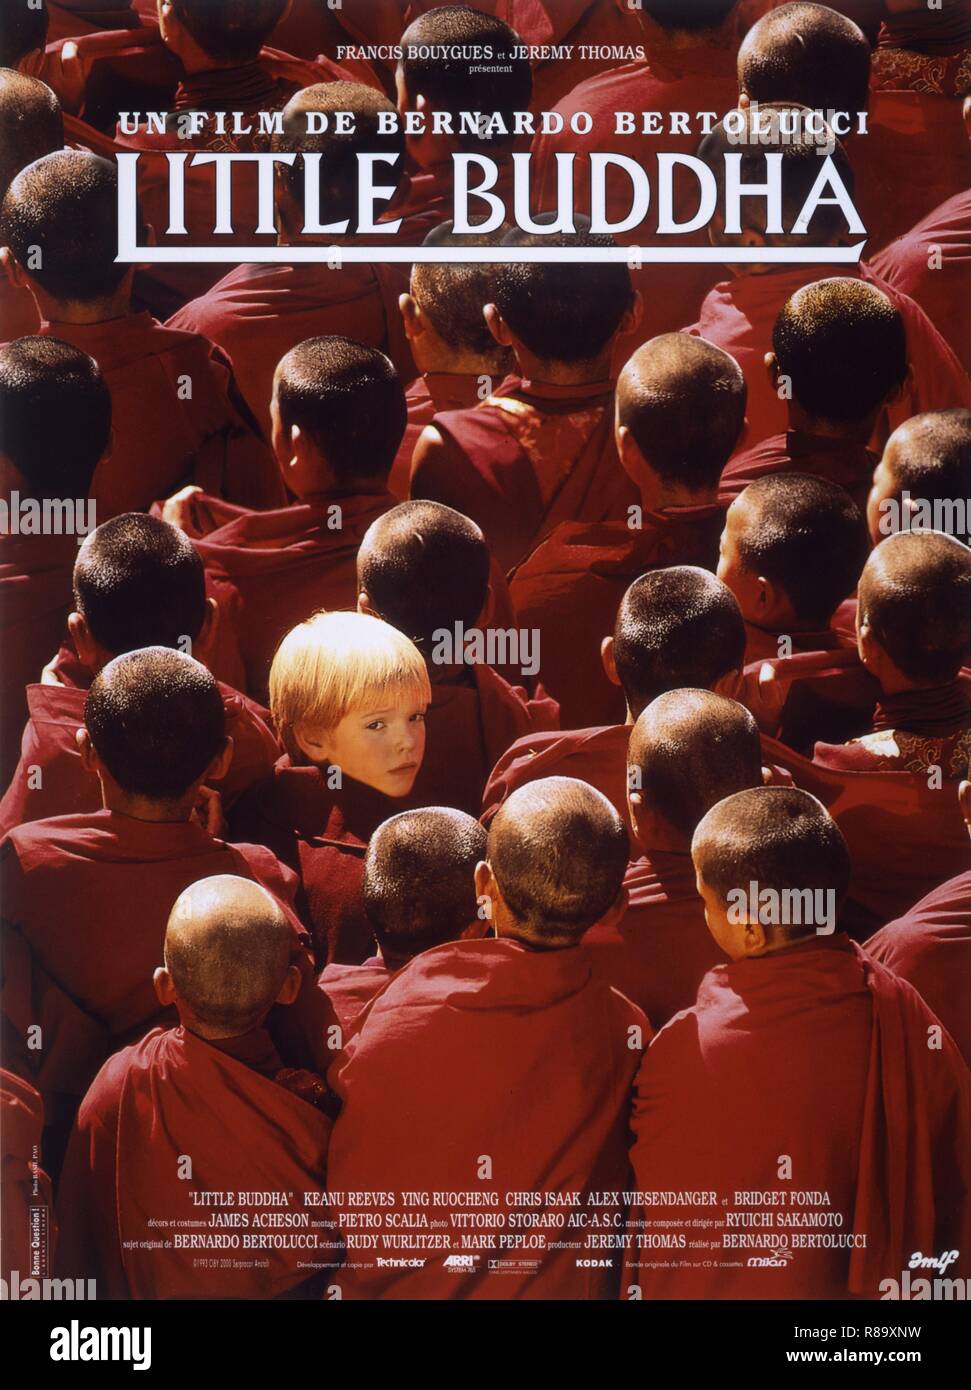 Little Buddha Year : 1993 Italy / France / UK Director : Bernardo